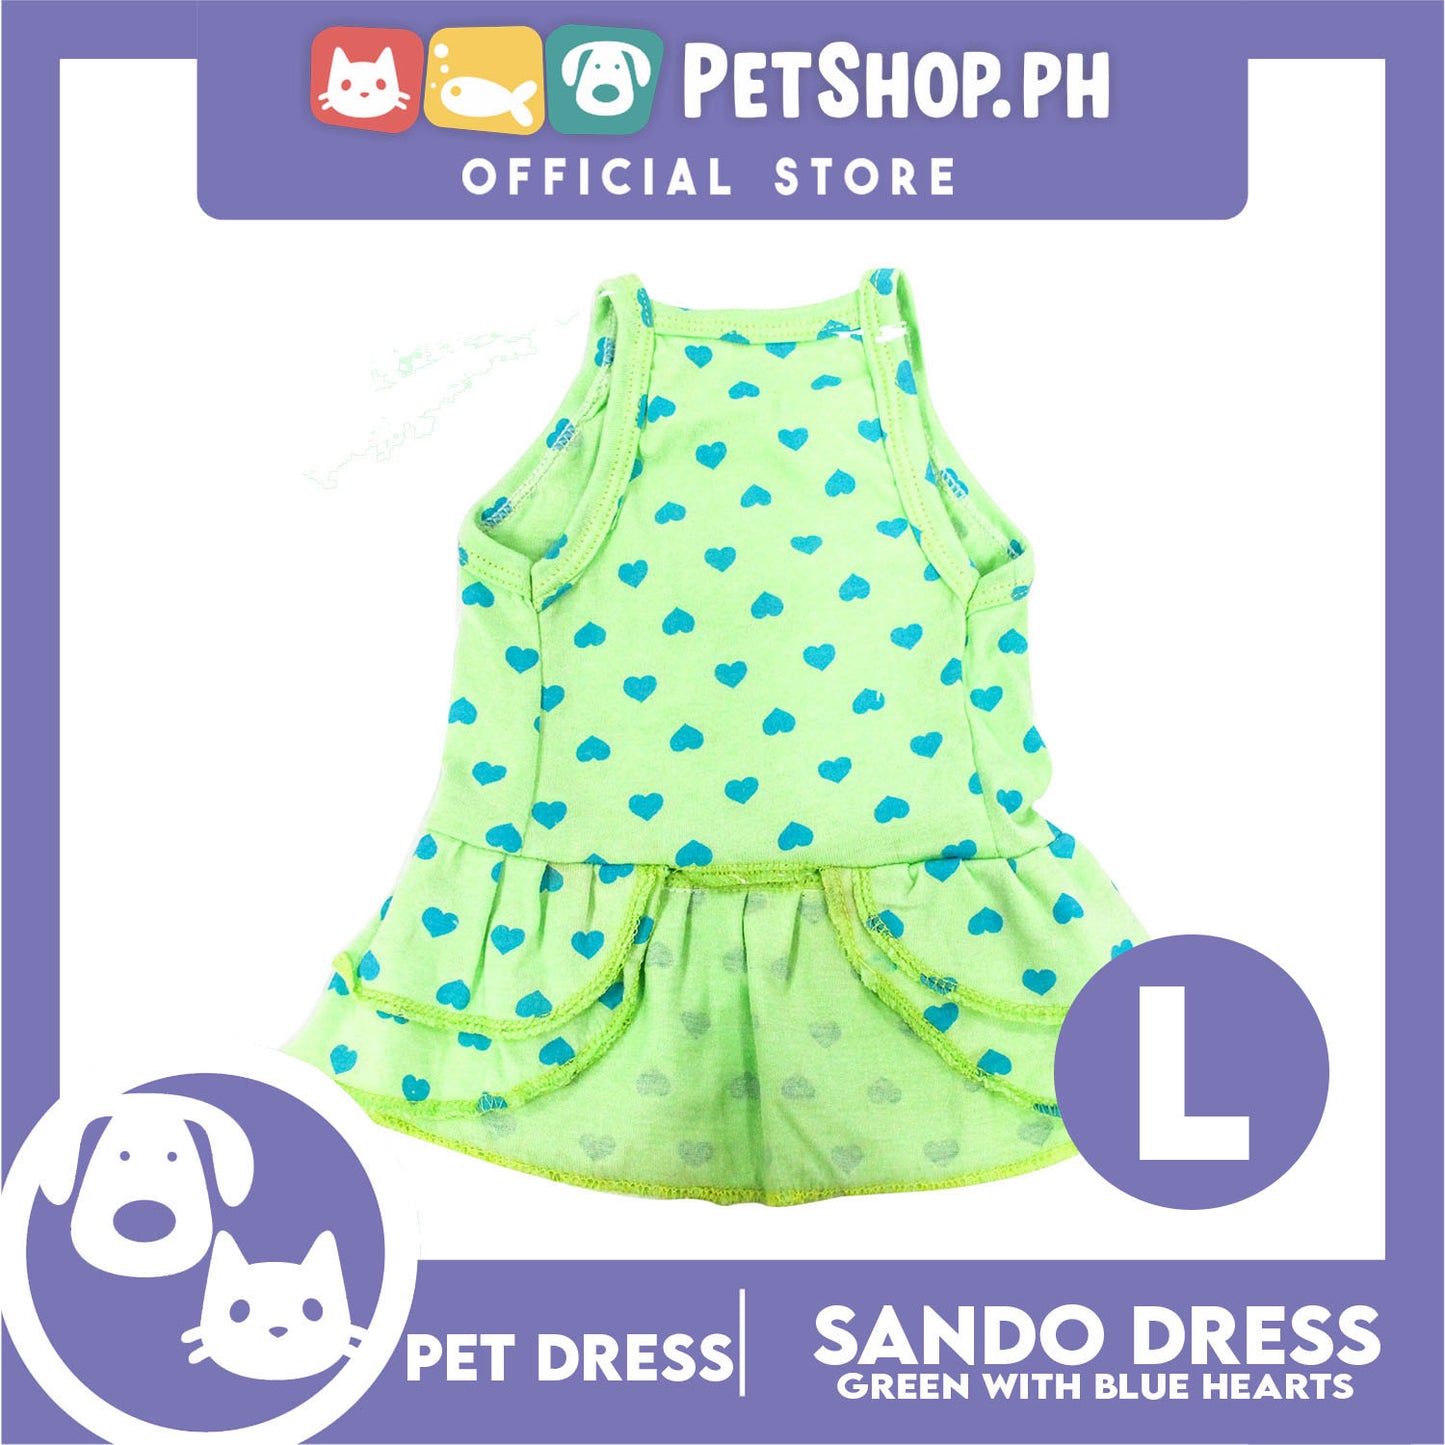 Pet Dress Summer Blue Heart Print Skirt (Large) for Small Dog -Cute Pet Clothes, Pet Skirt and Sando Dress